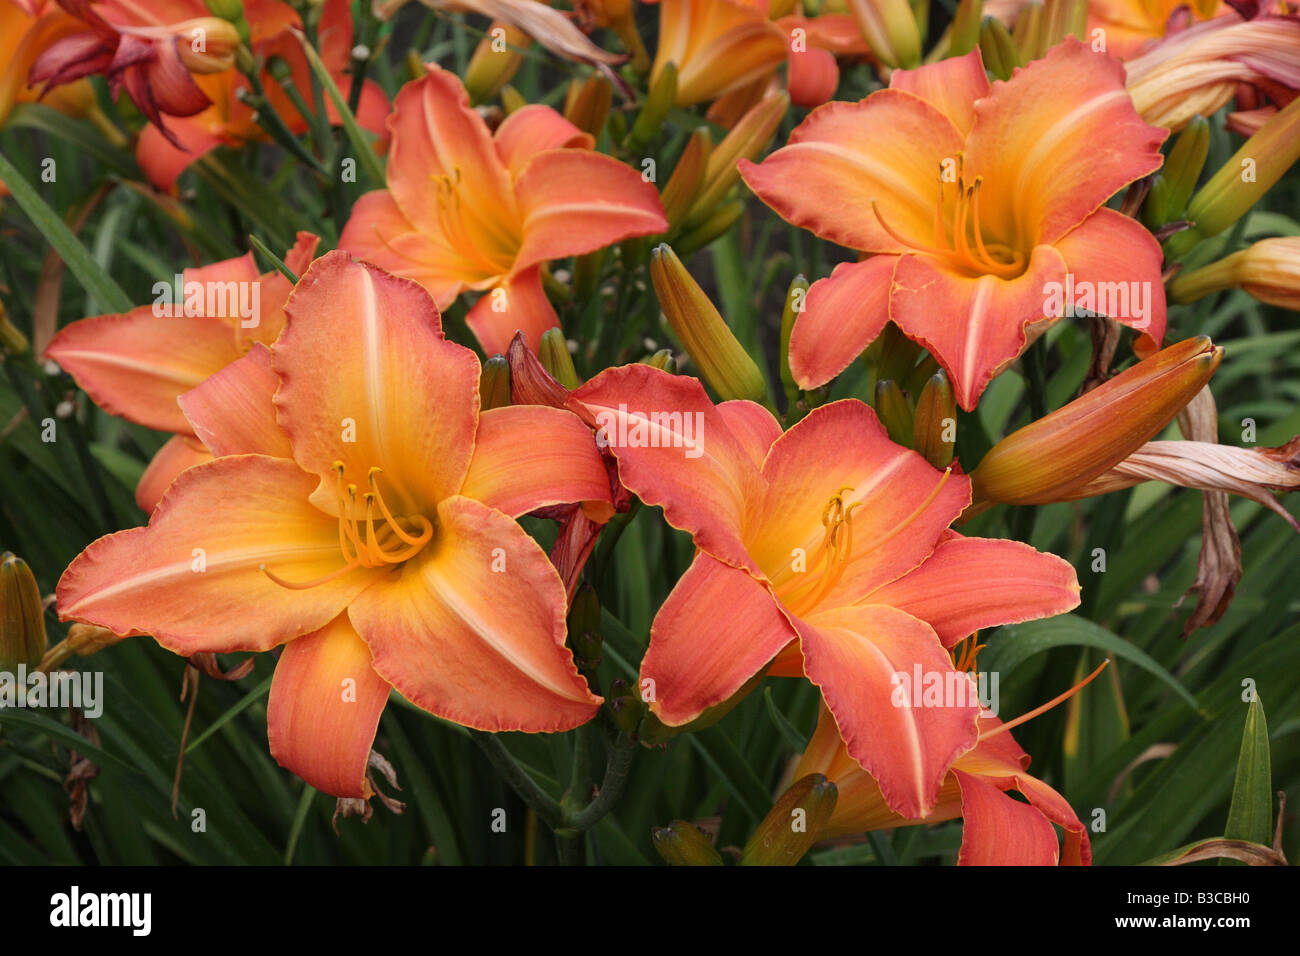 Orange lily flowers blooming Hemerocallis Stock Photo